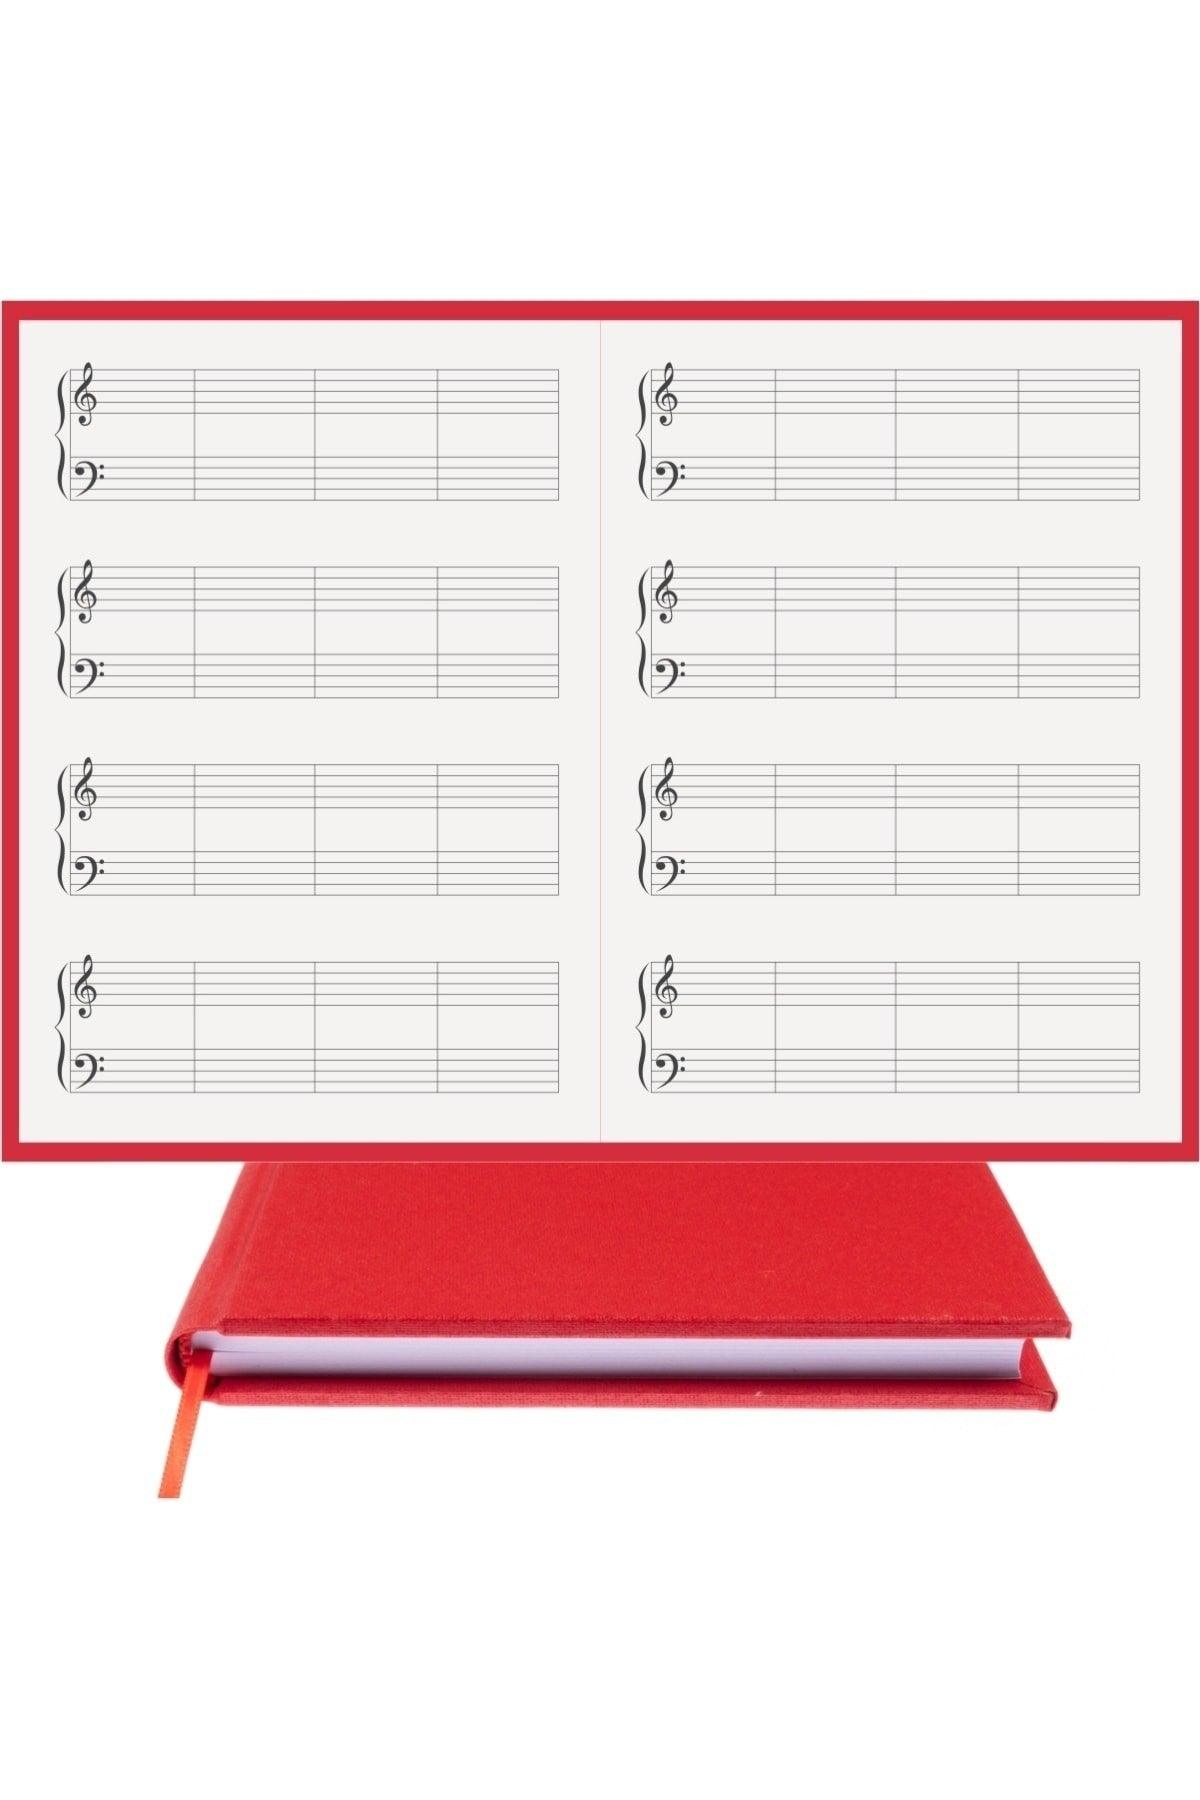 Piano Notebook (Left Fa Key Cutout